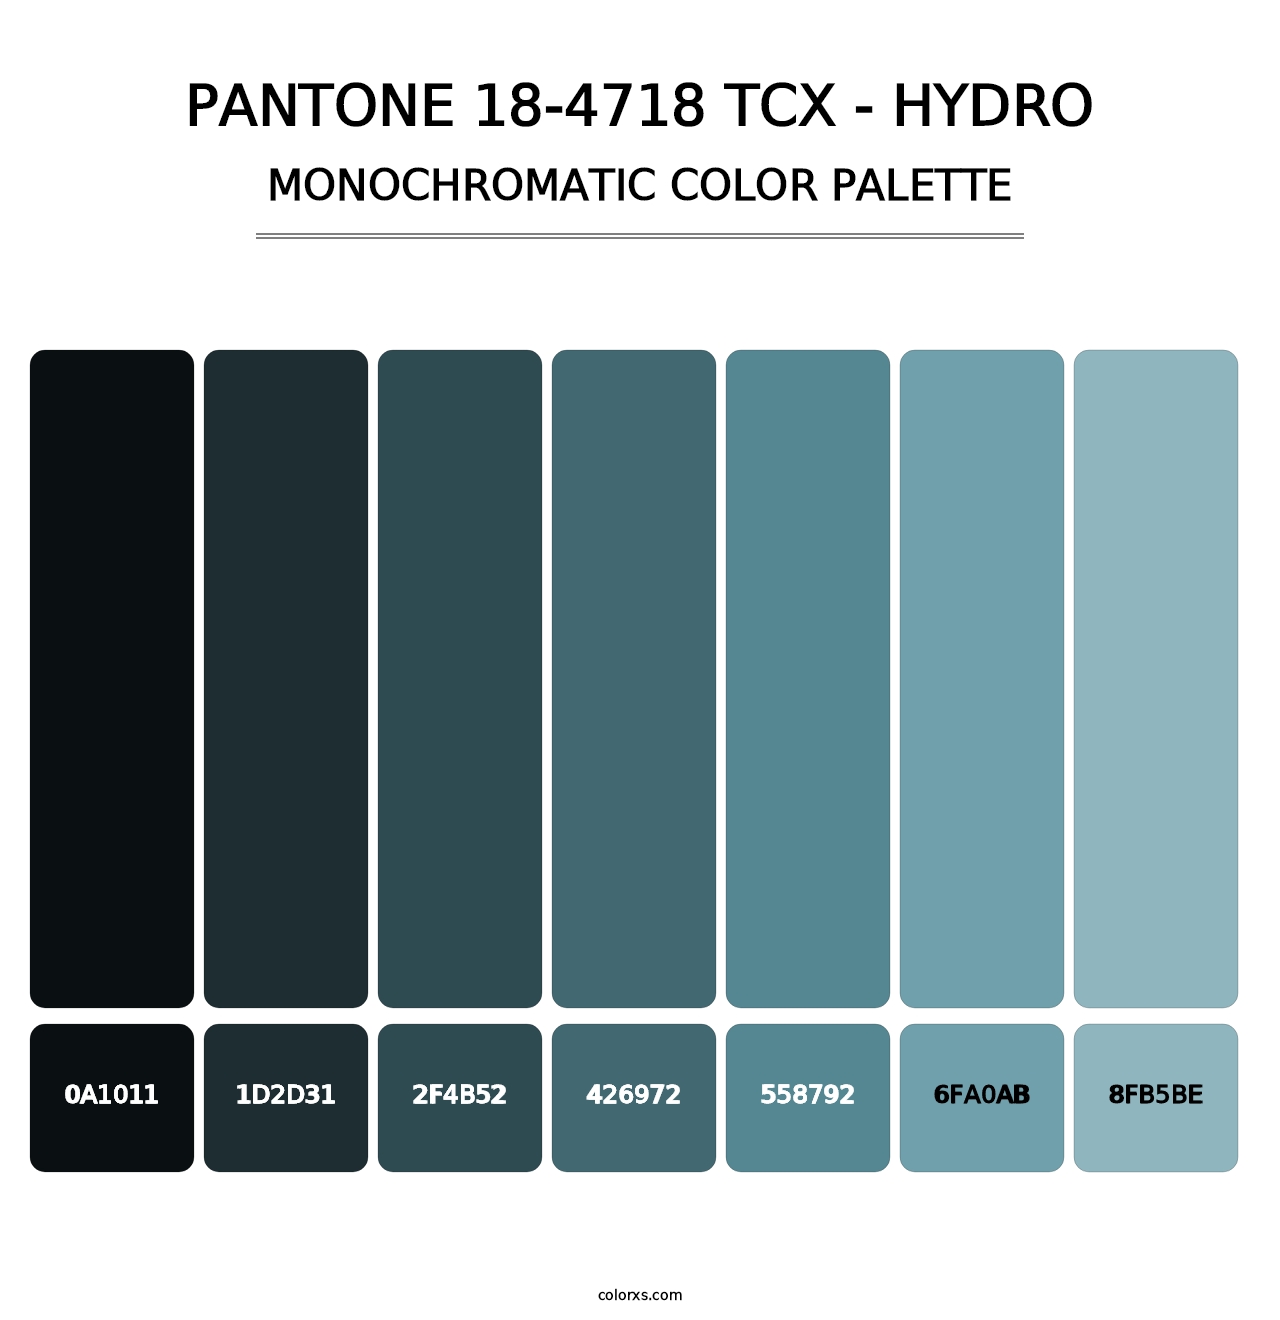 PANTONE 18-4718 TCX - Hydro - Monochromatic Color Palette